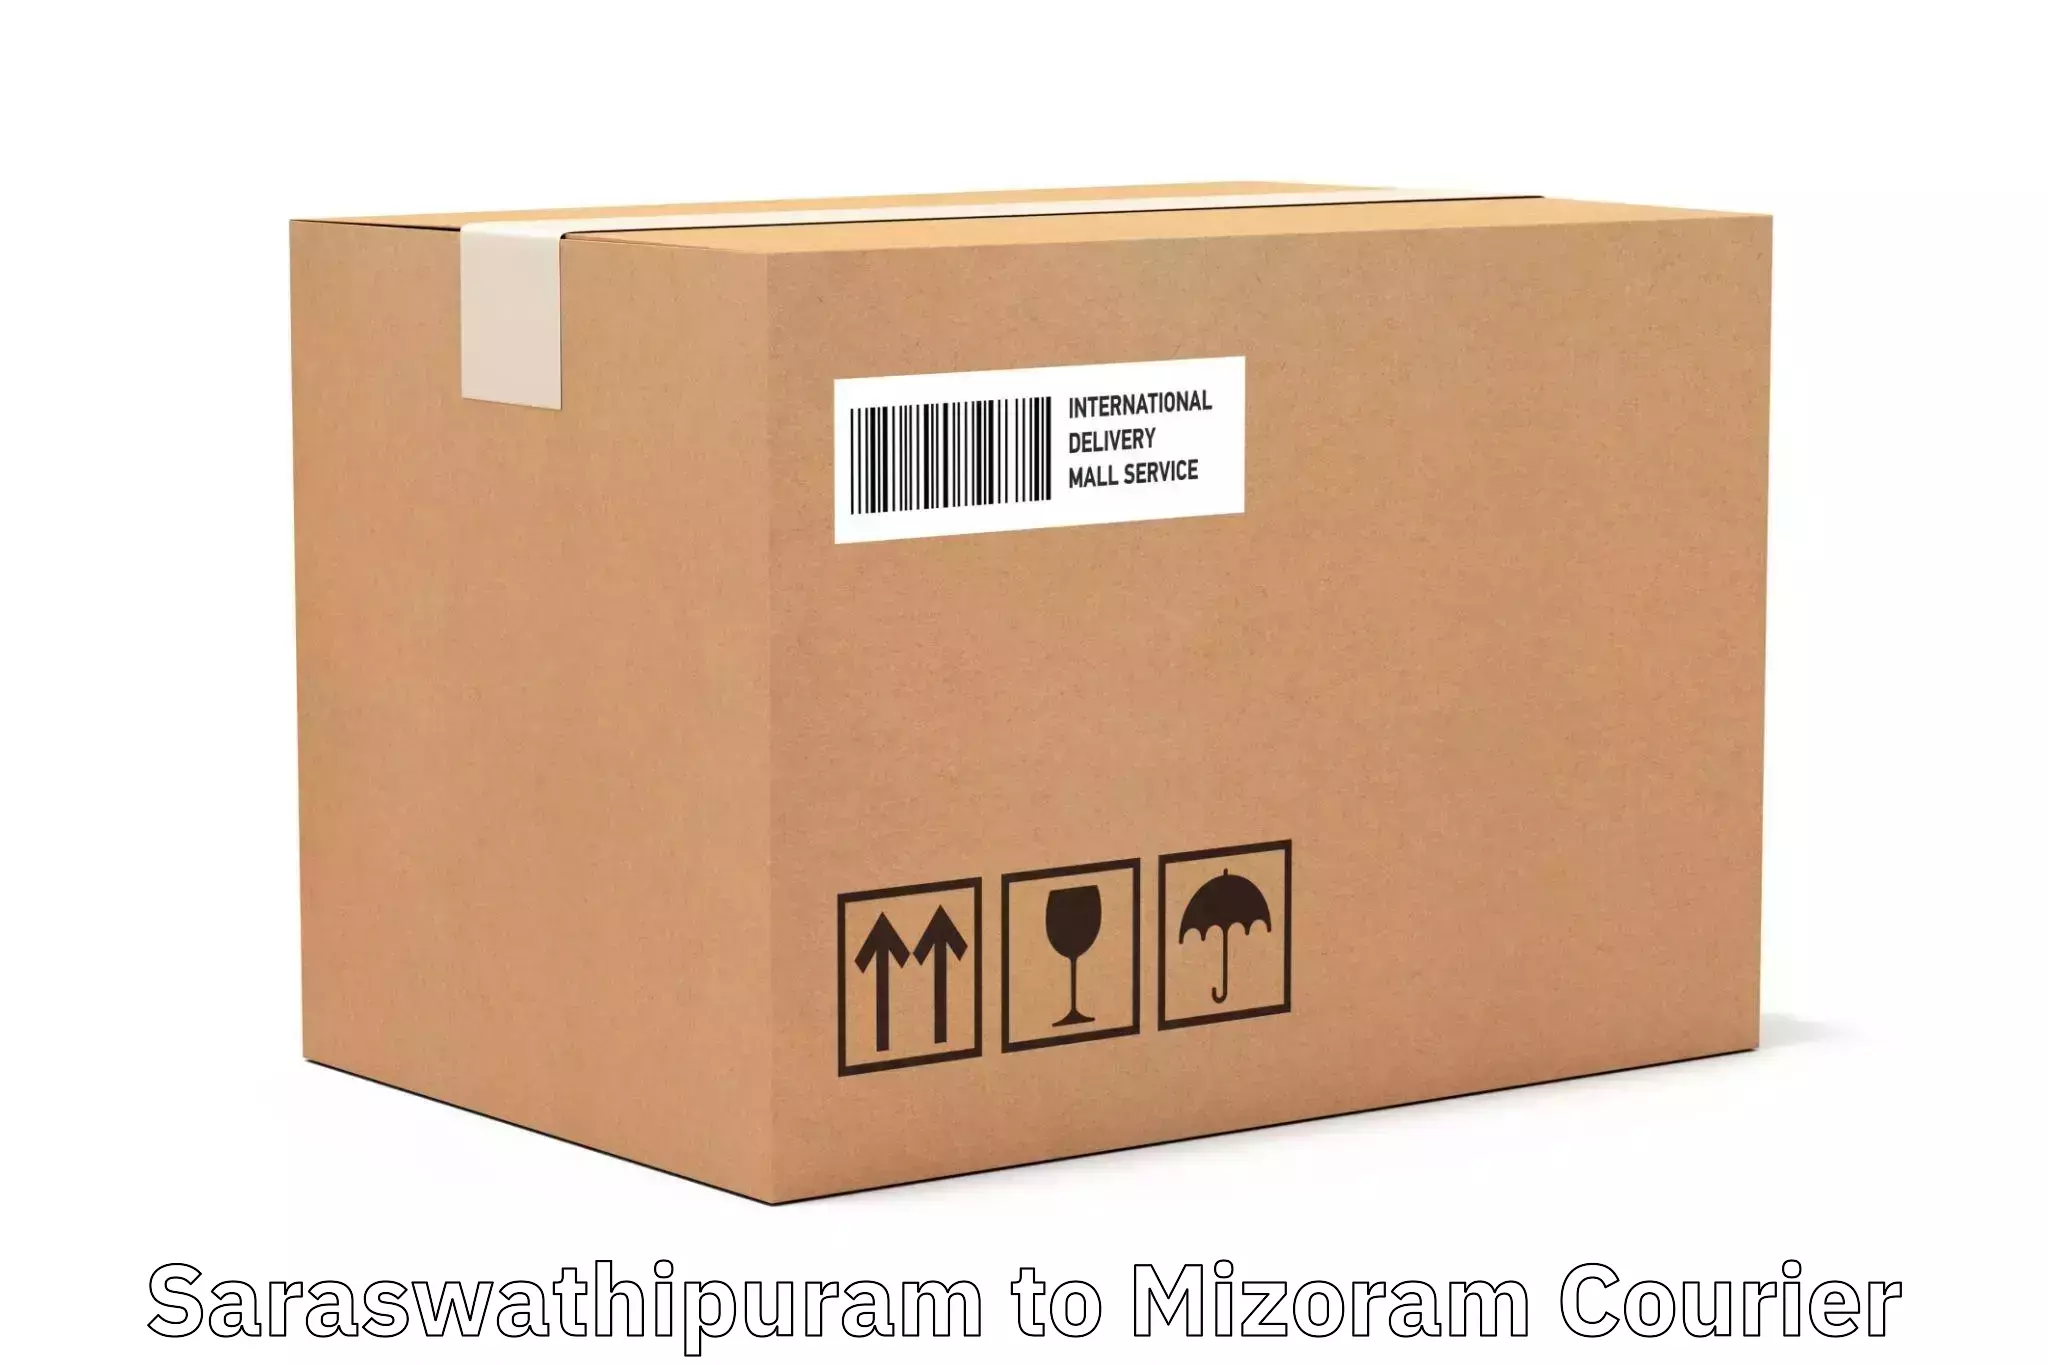 High-capacity parcel service Saraswathipuram to Mizoram